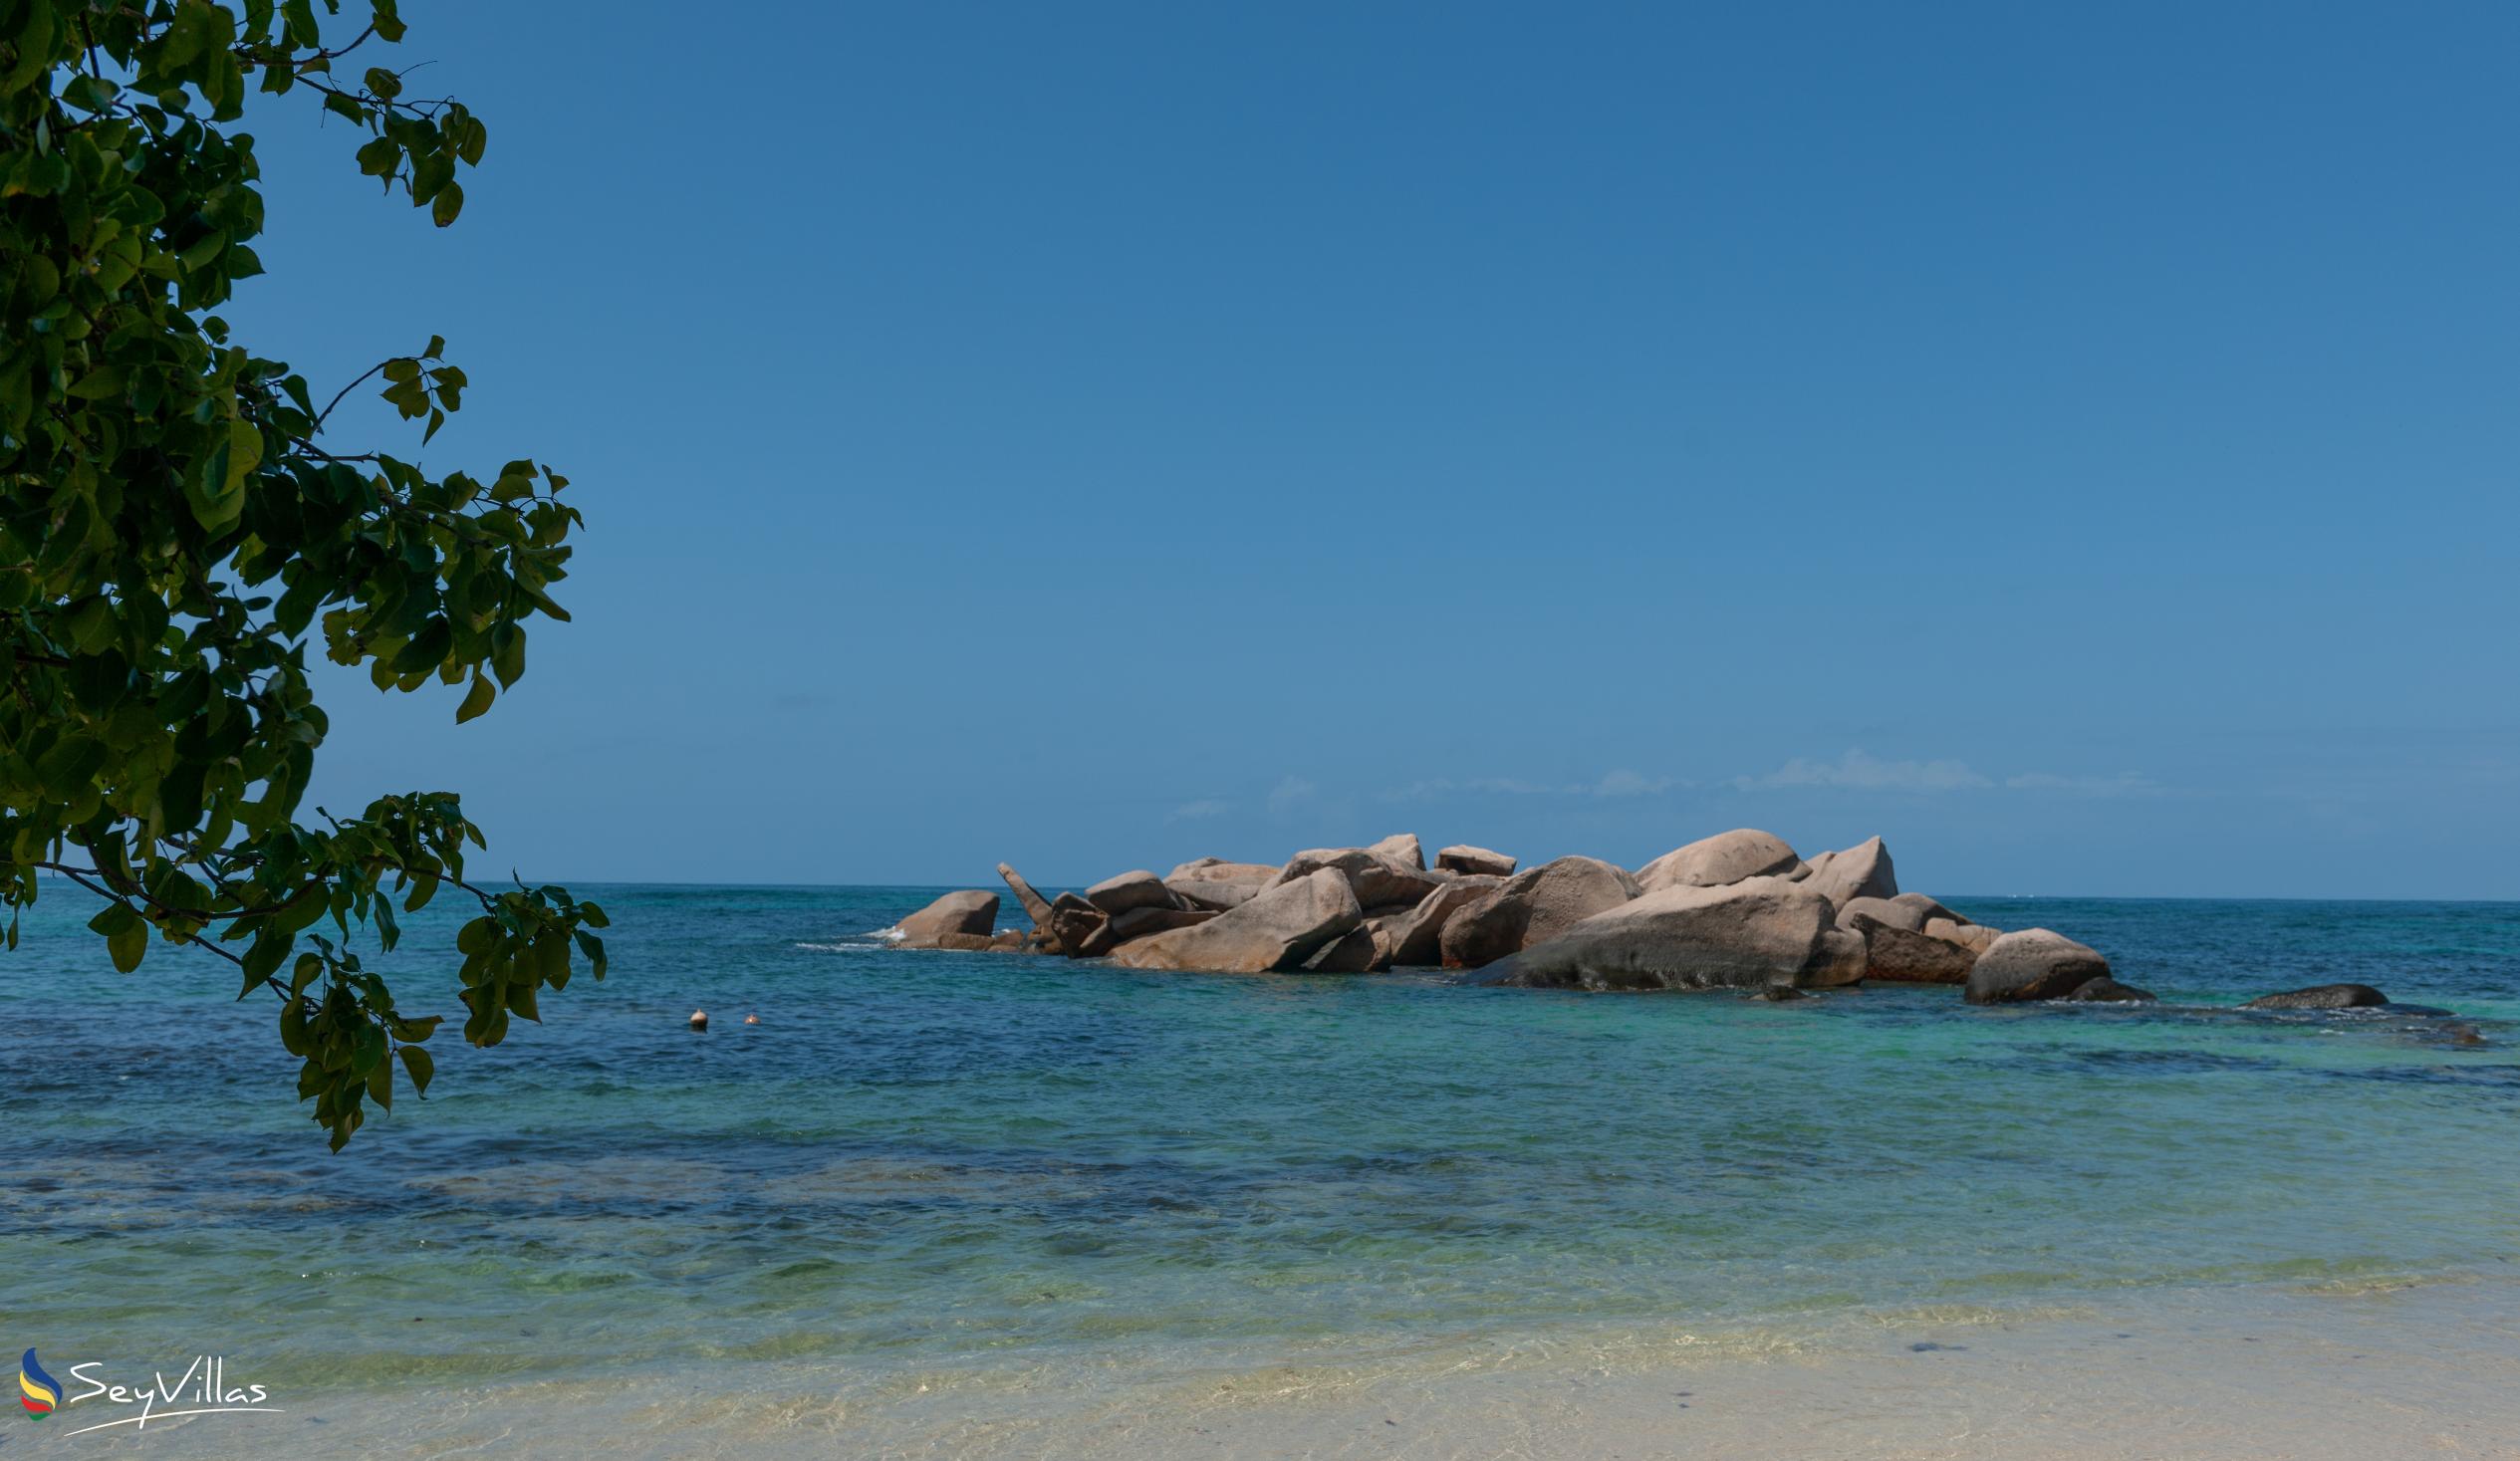 Photo 26: Nid'Aigle Lodge - Beaches - Praslin (Seychelles)